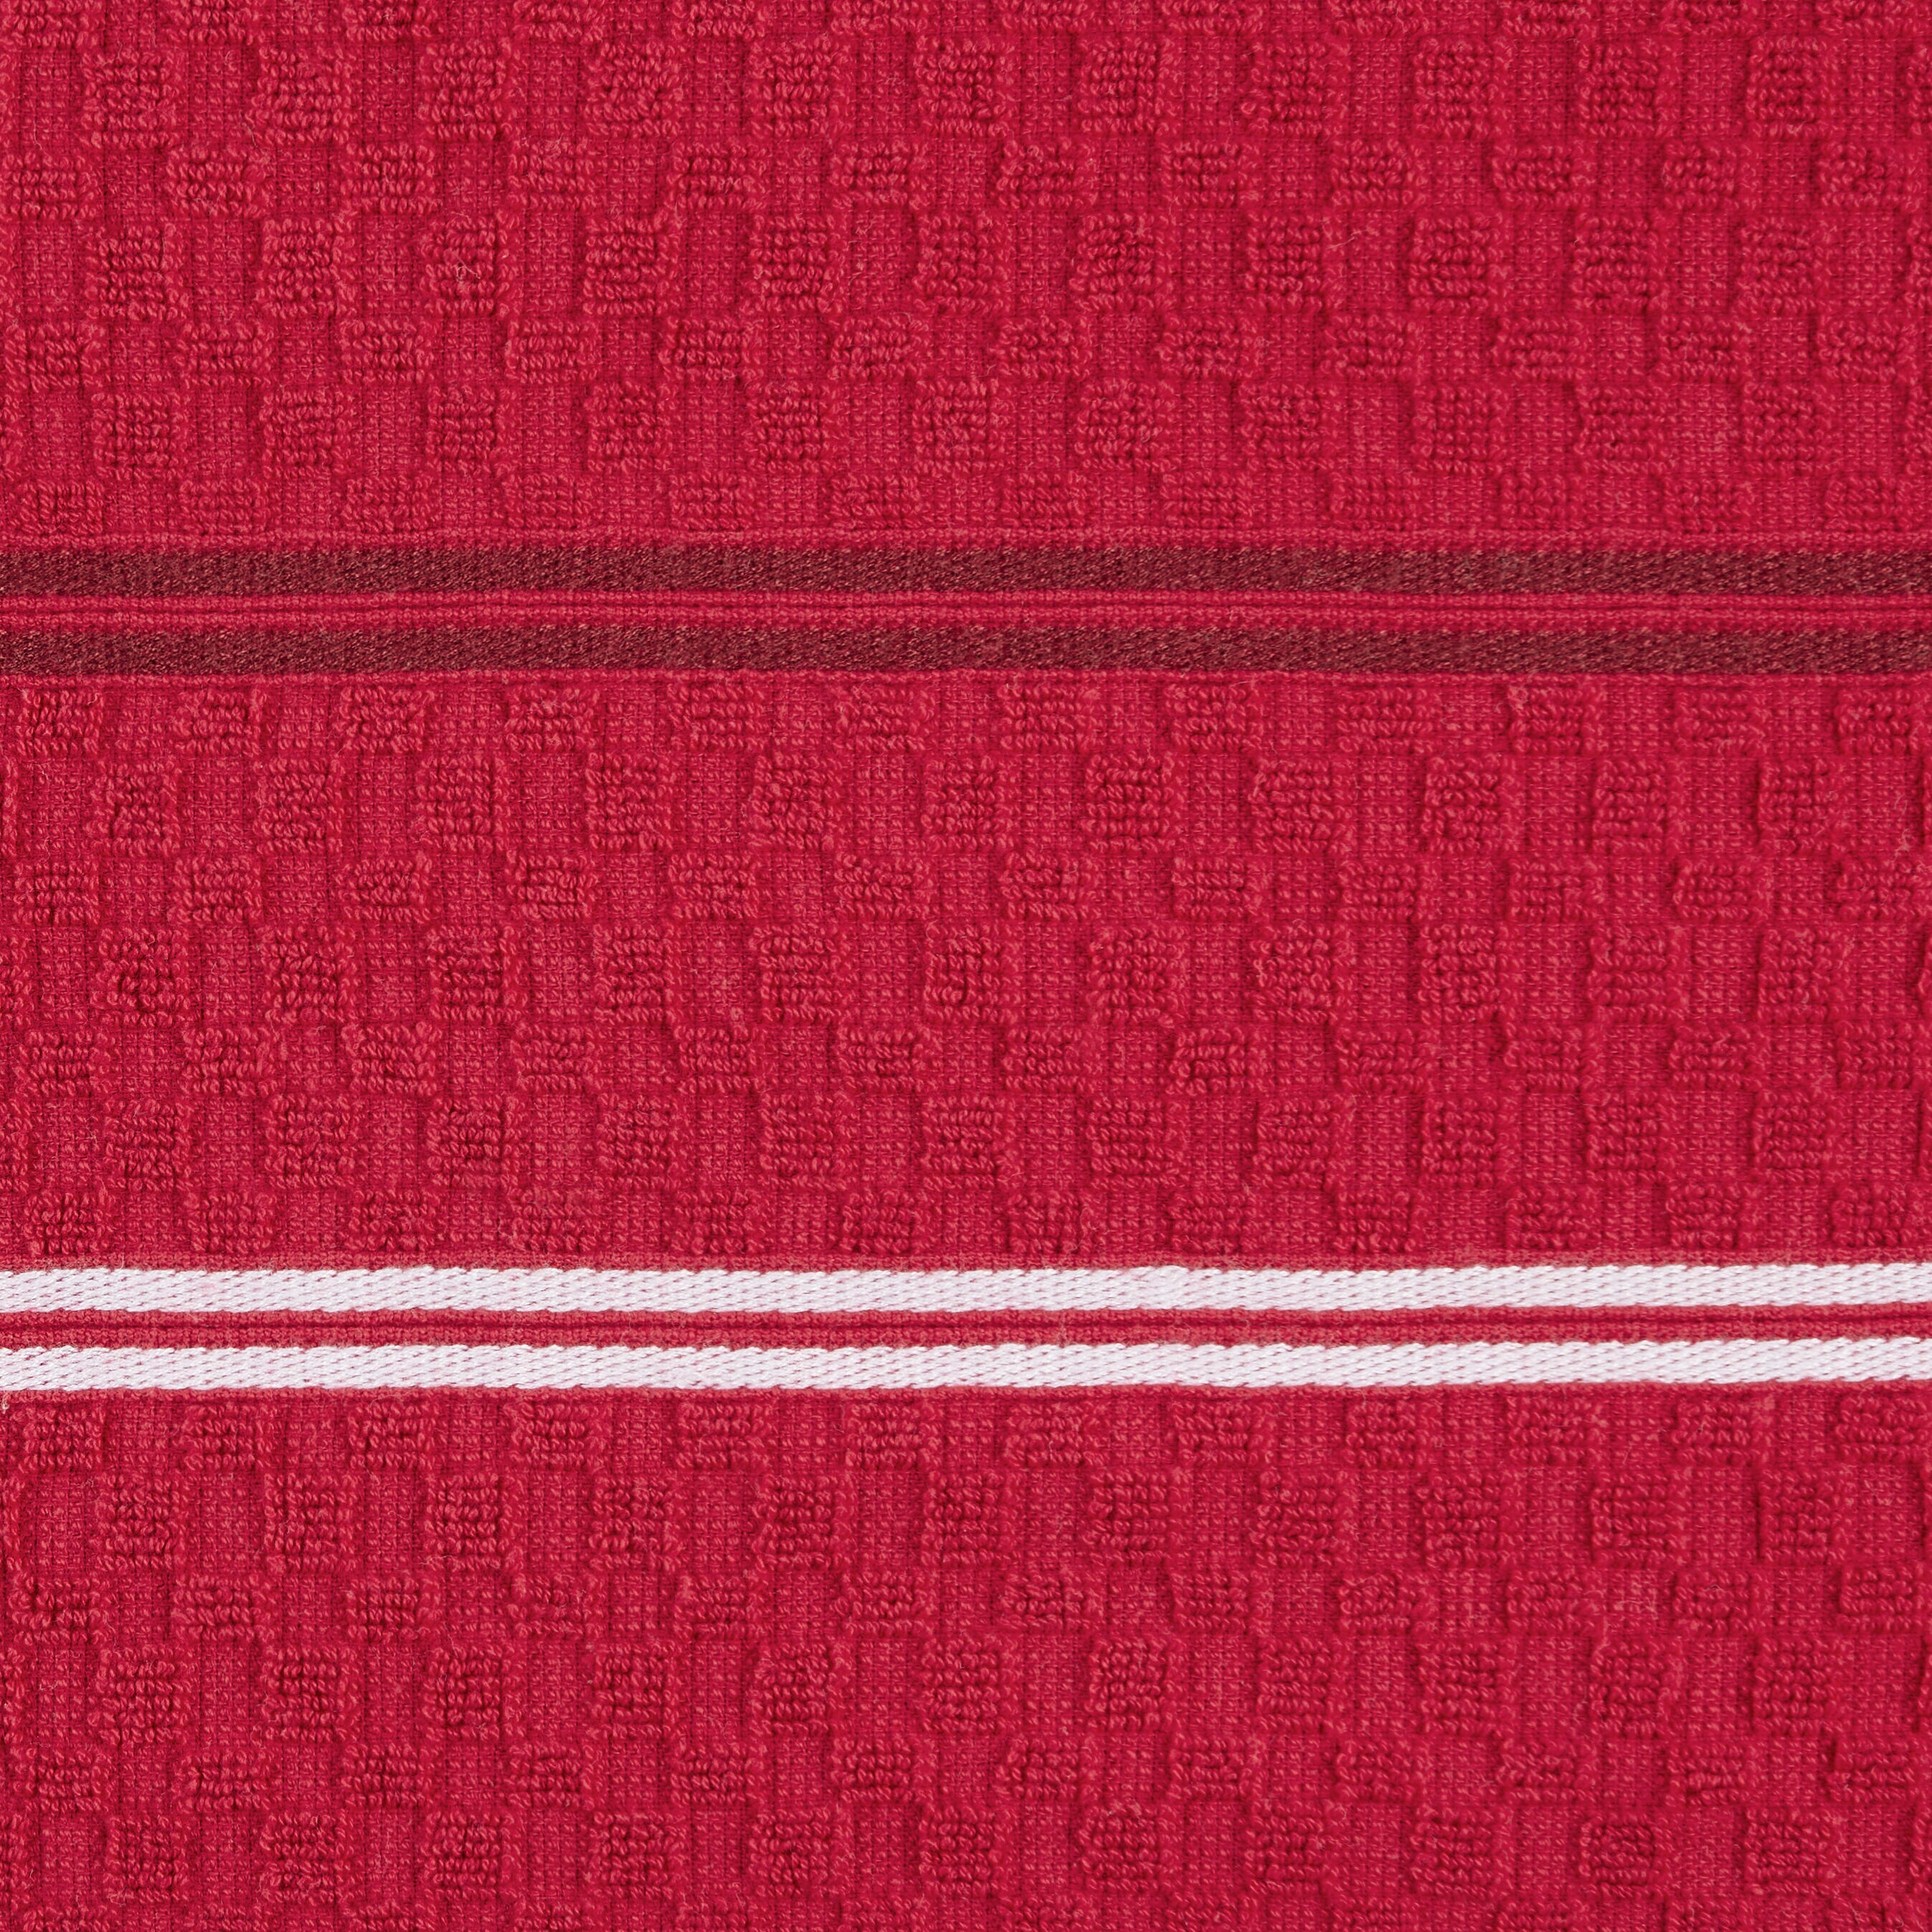 KitchenAid Stripe Gingham Dual Purpose Kitchen Towel 3-Pack Set, Passion  Red, 16 x 28